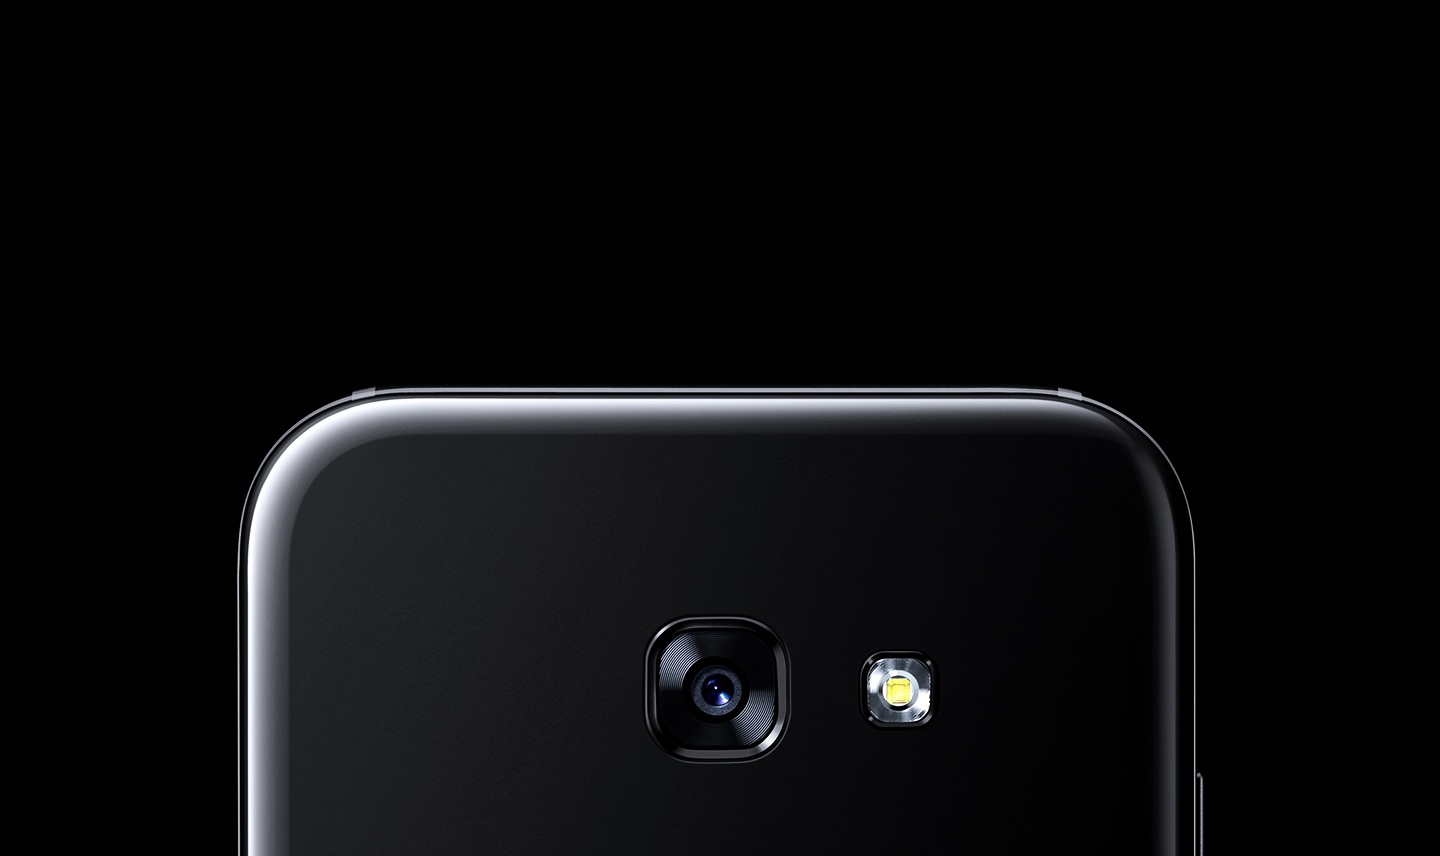 Close up of the Galaxy A5 (2017) rear camera.